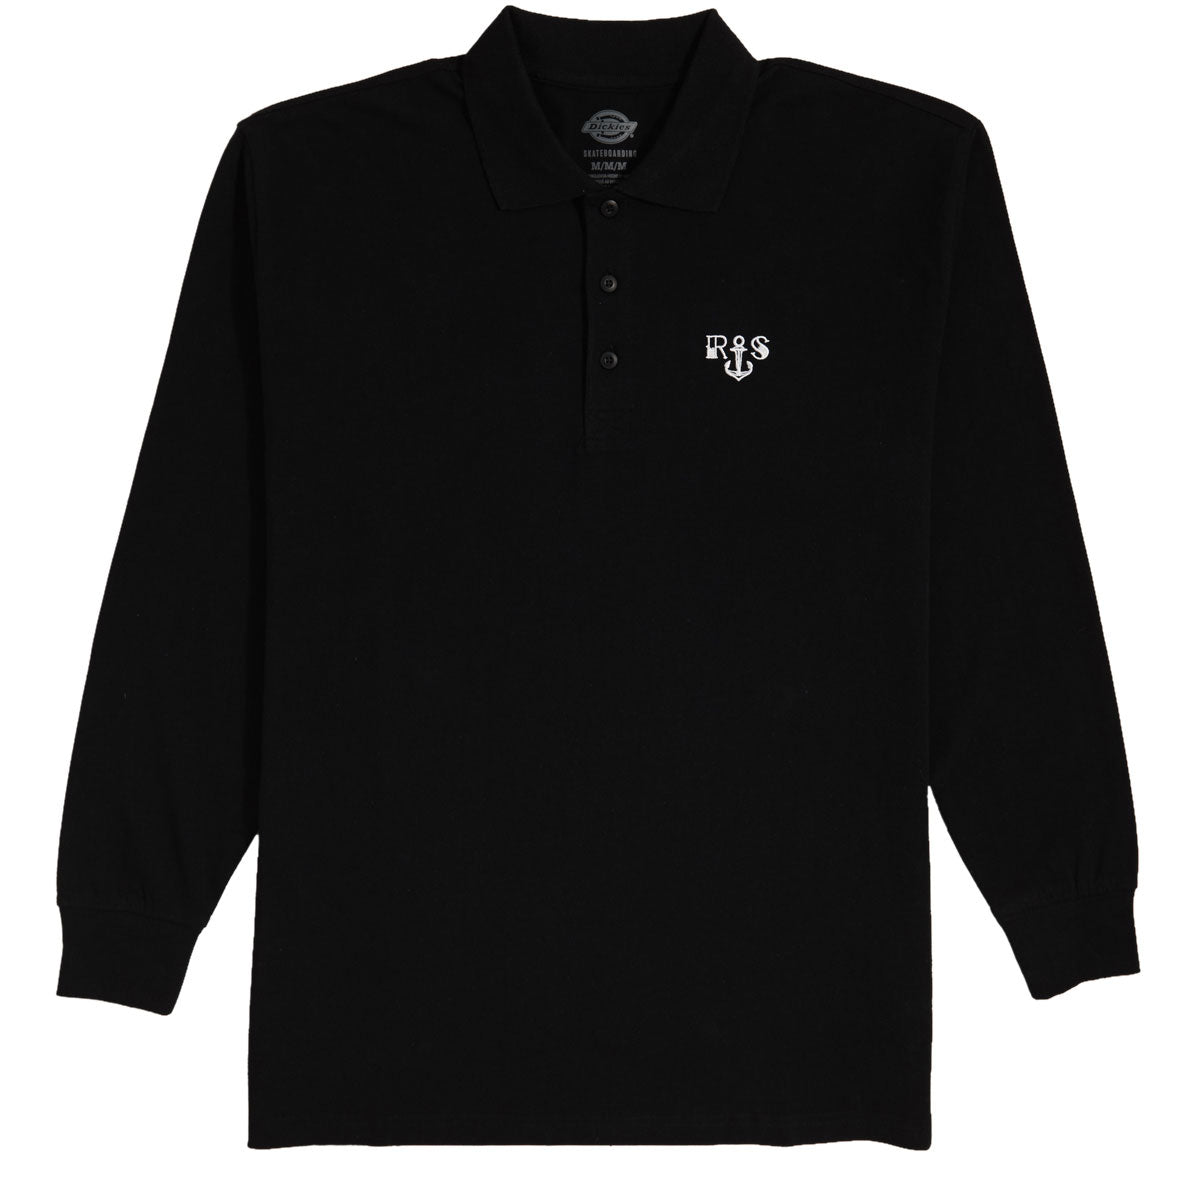 Dickies Ronnie Sandoval Polo Shirt - Knit Black